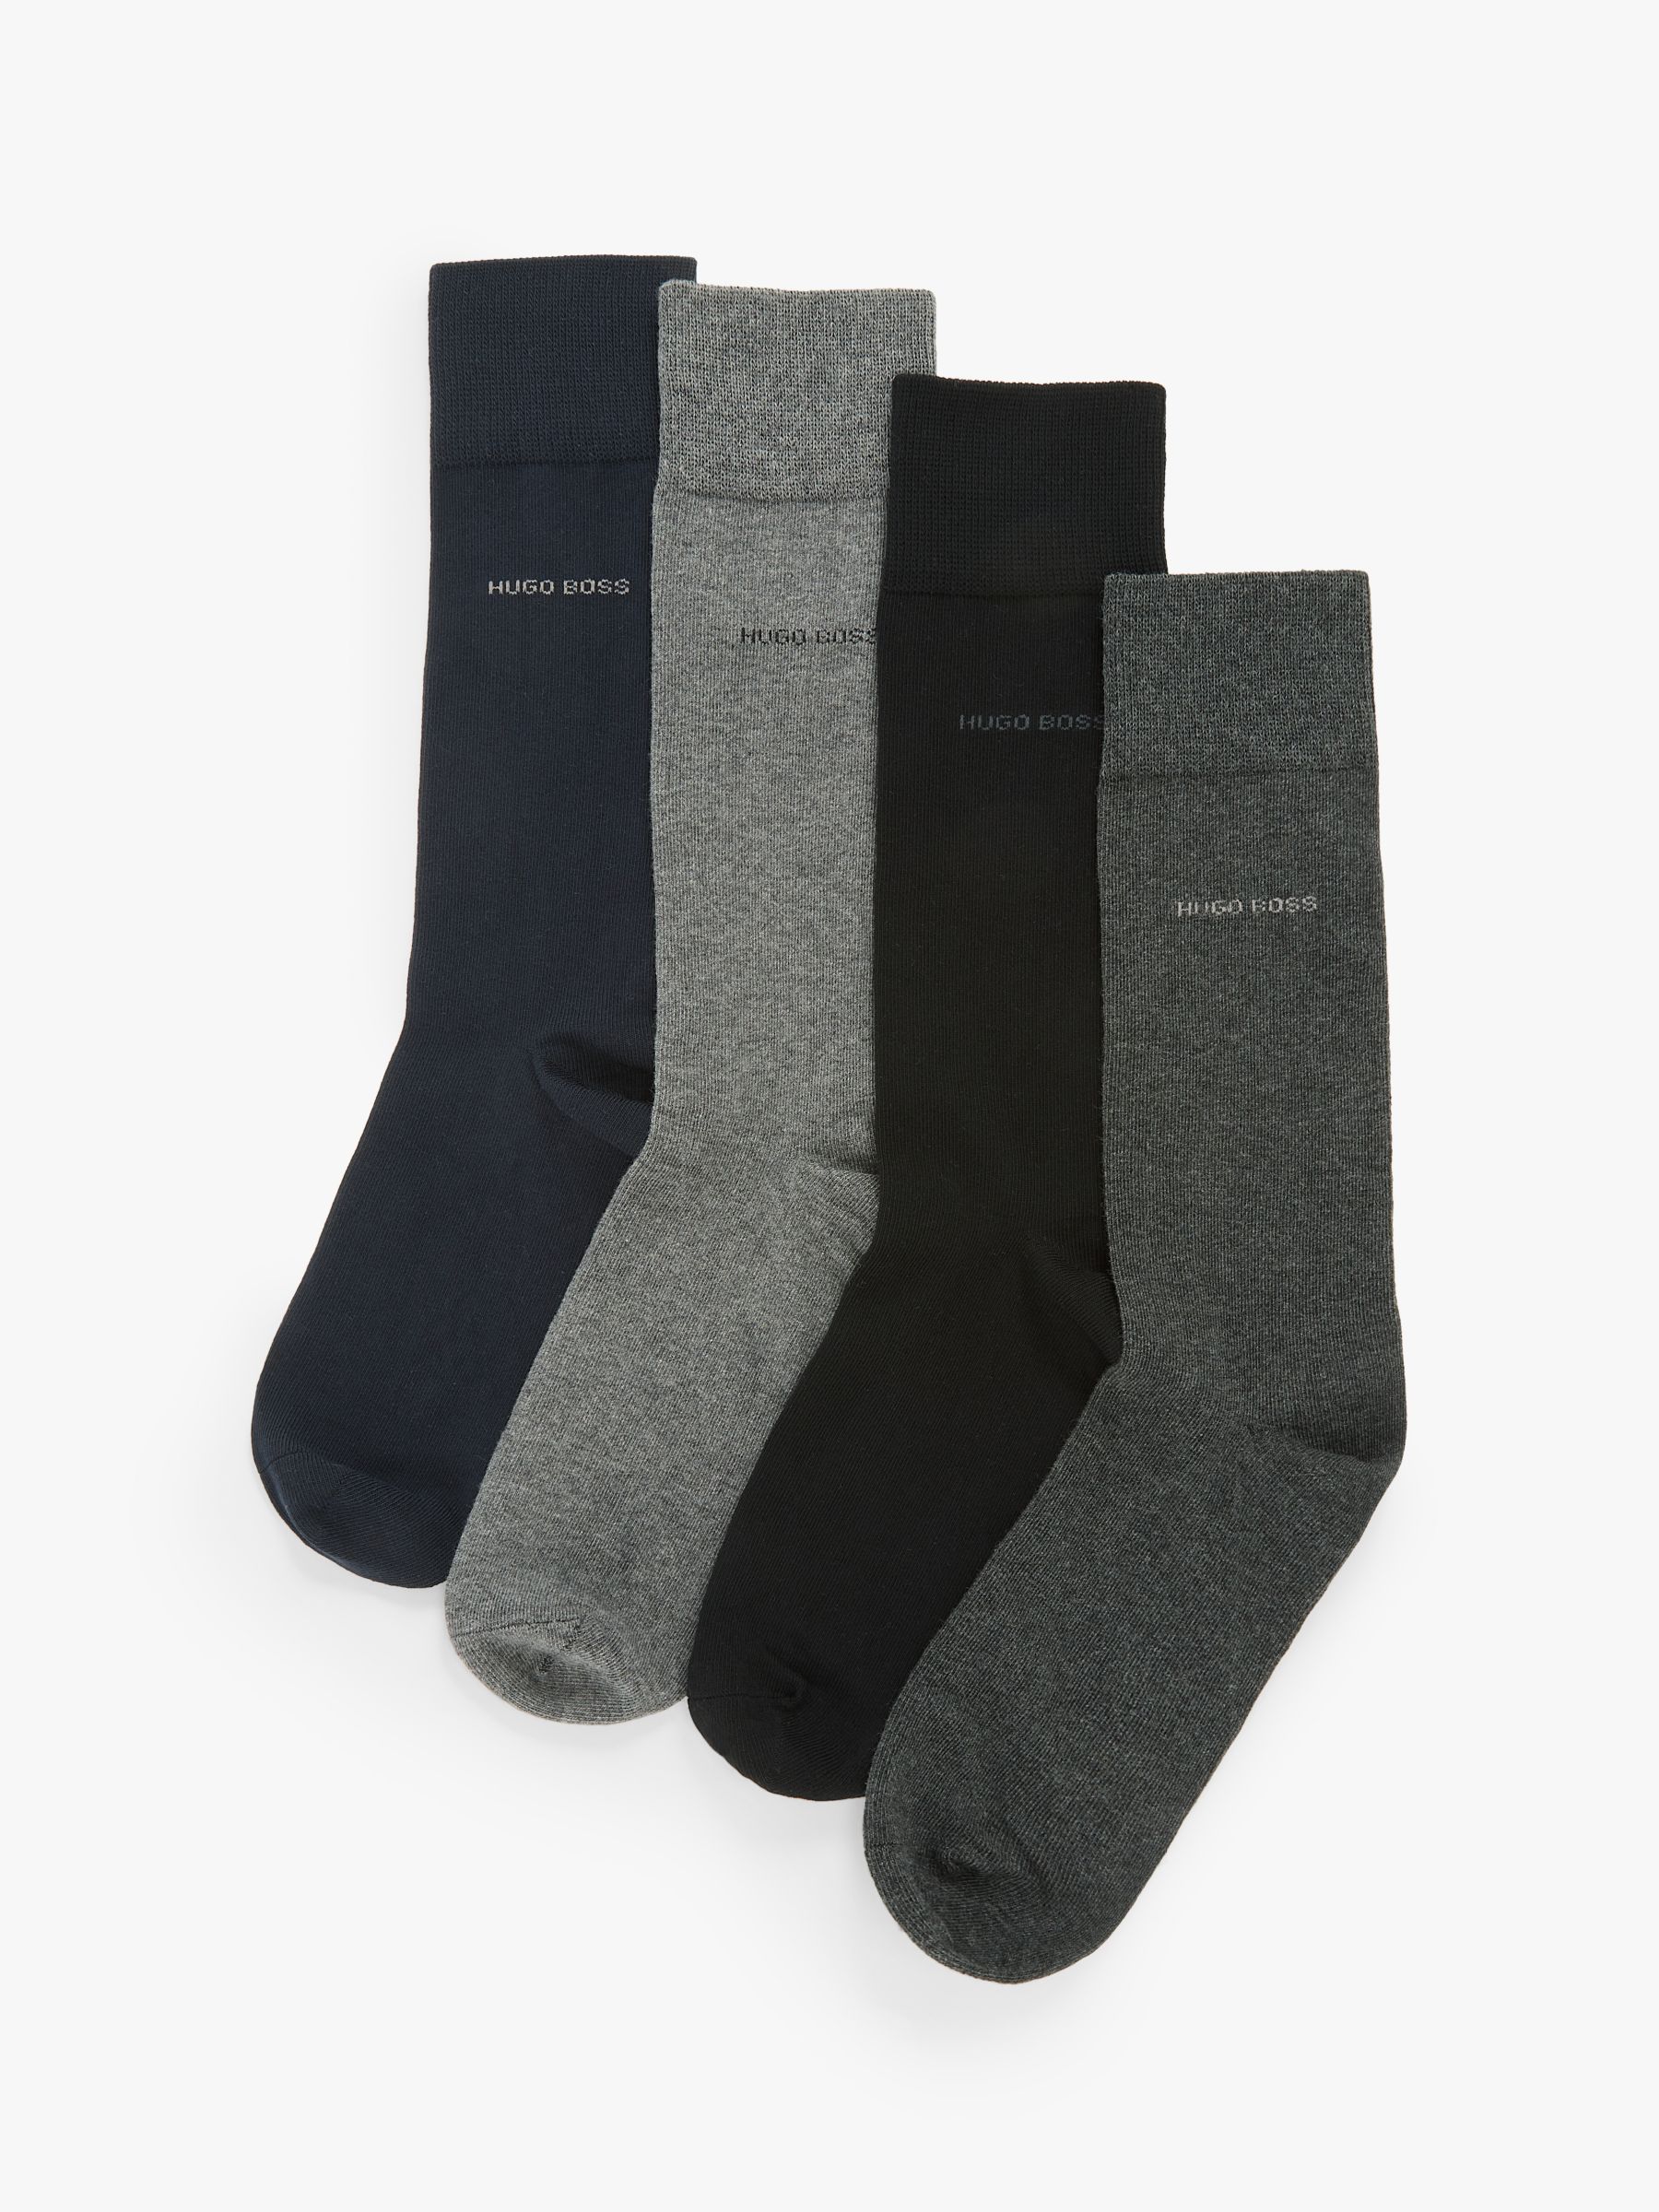 HUGO BOSS Combed Cotton Socks, Pack of 4, Monochrome